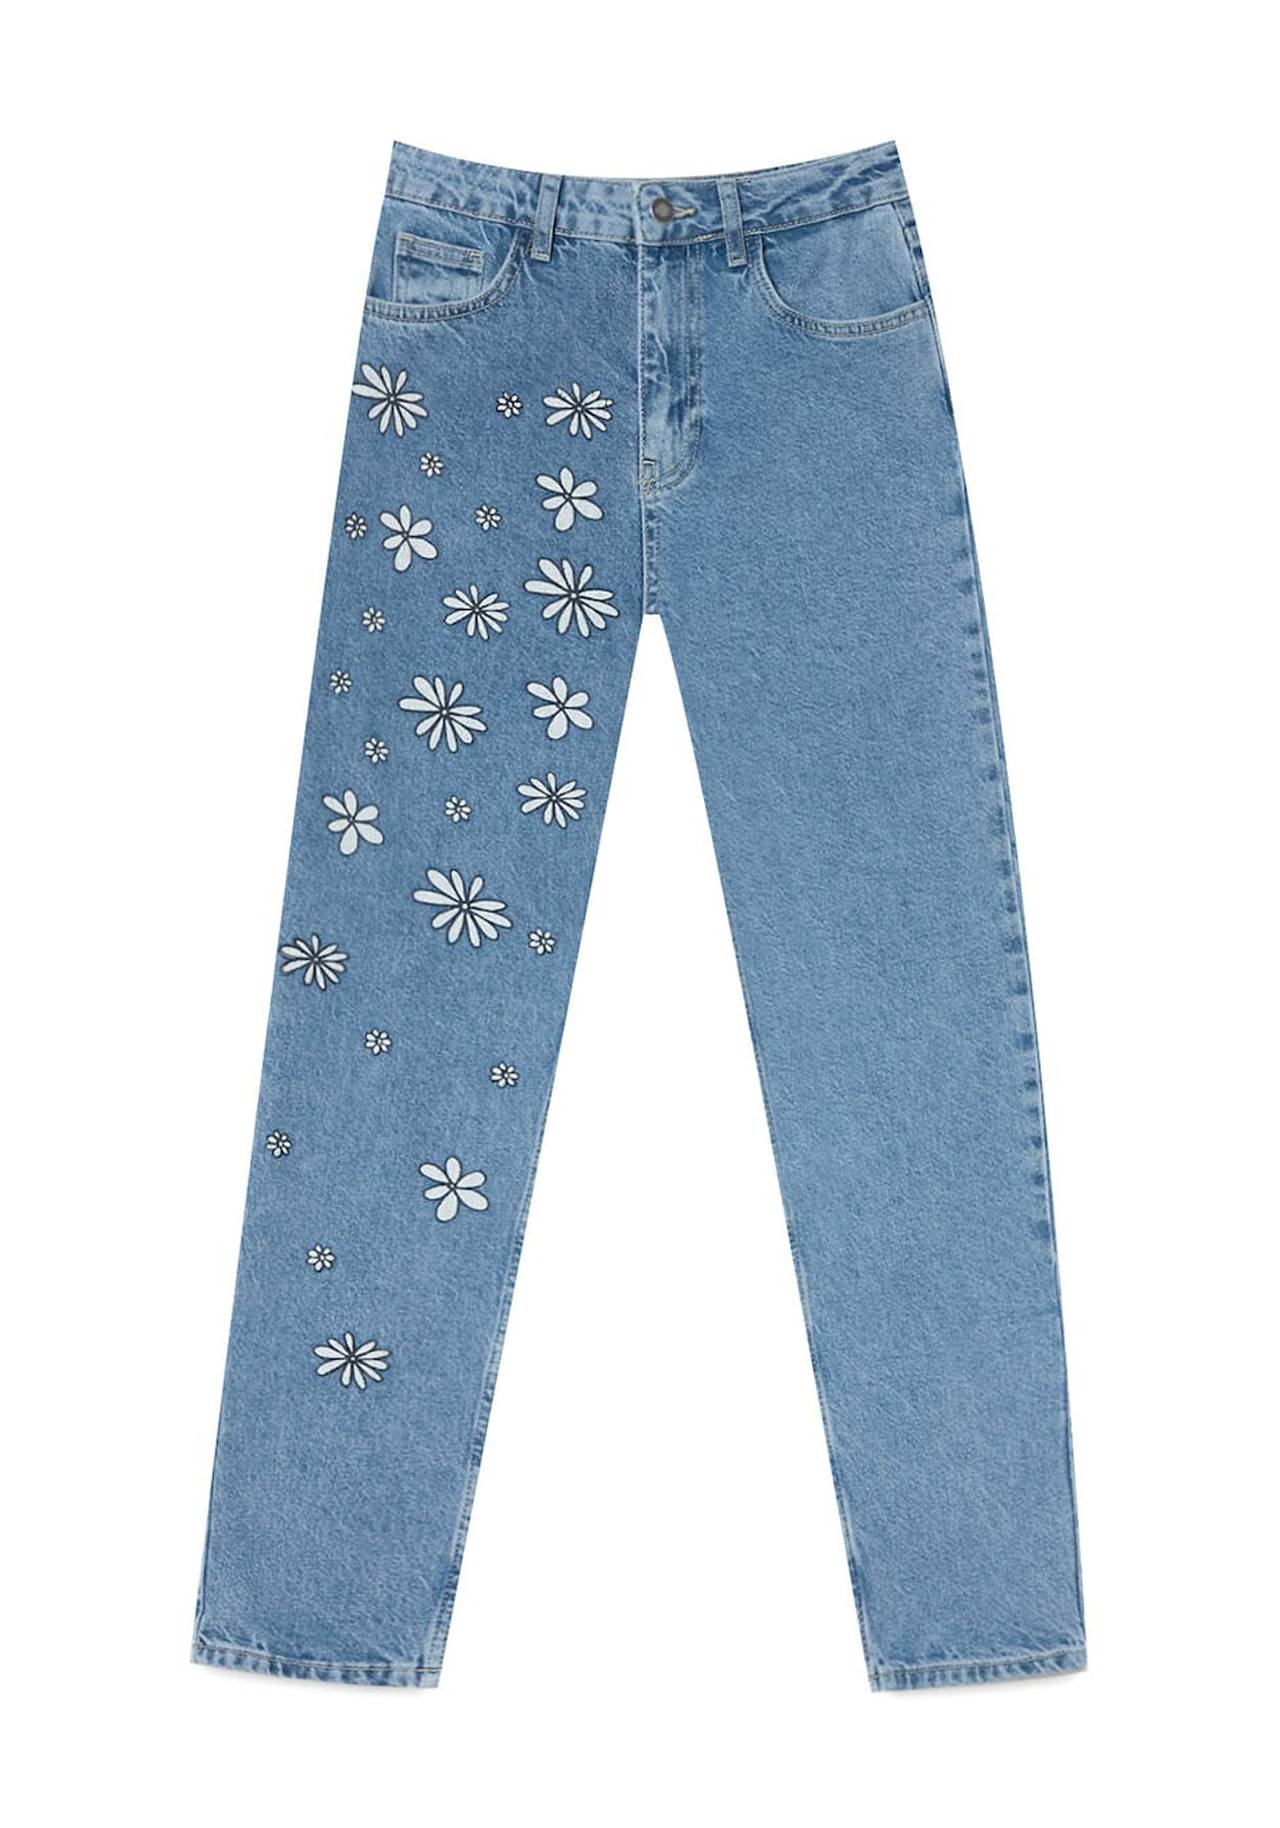 jeans flores bordadas